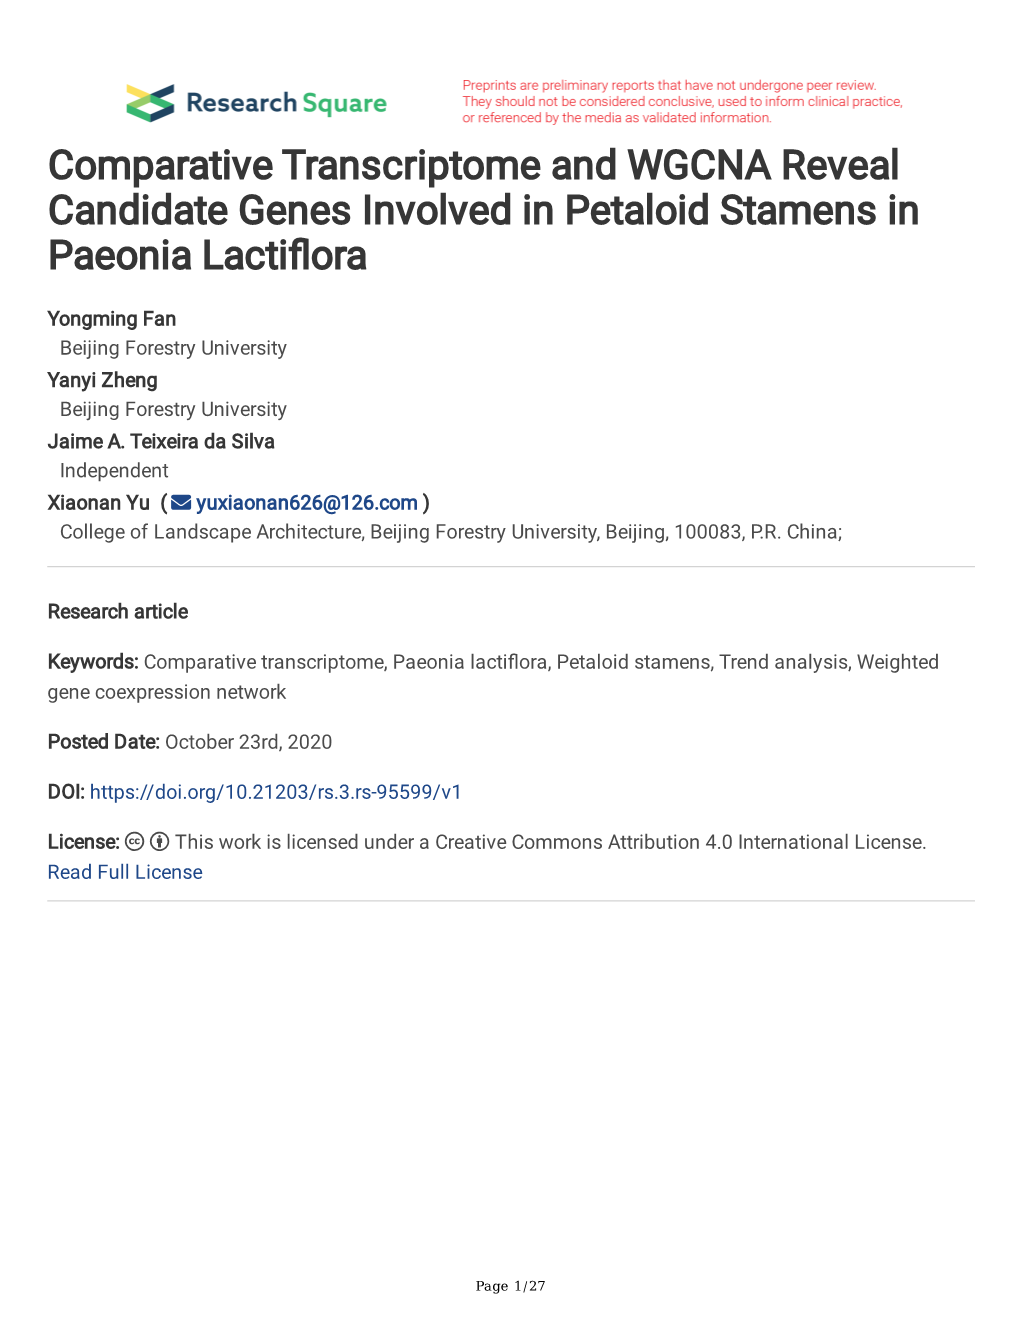 Comparative Transcriptome and WGCNA Reveal Candidate Genes Involved in Petaloid Stamens in Paeonia Lactifora